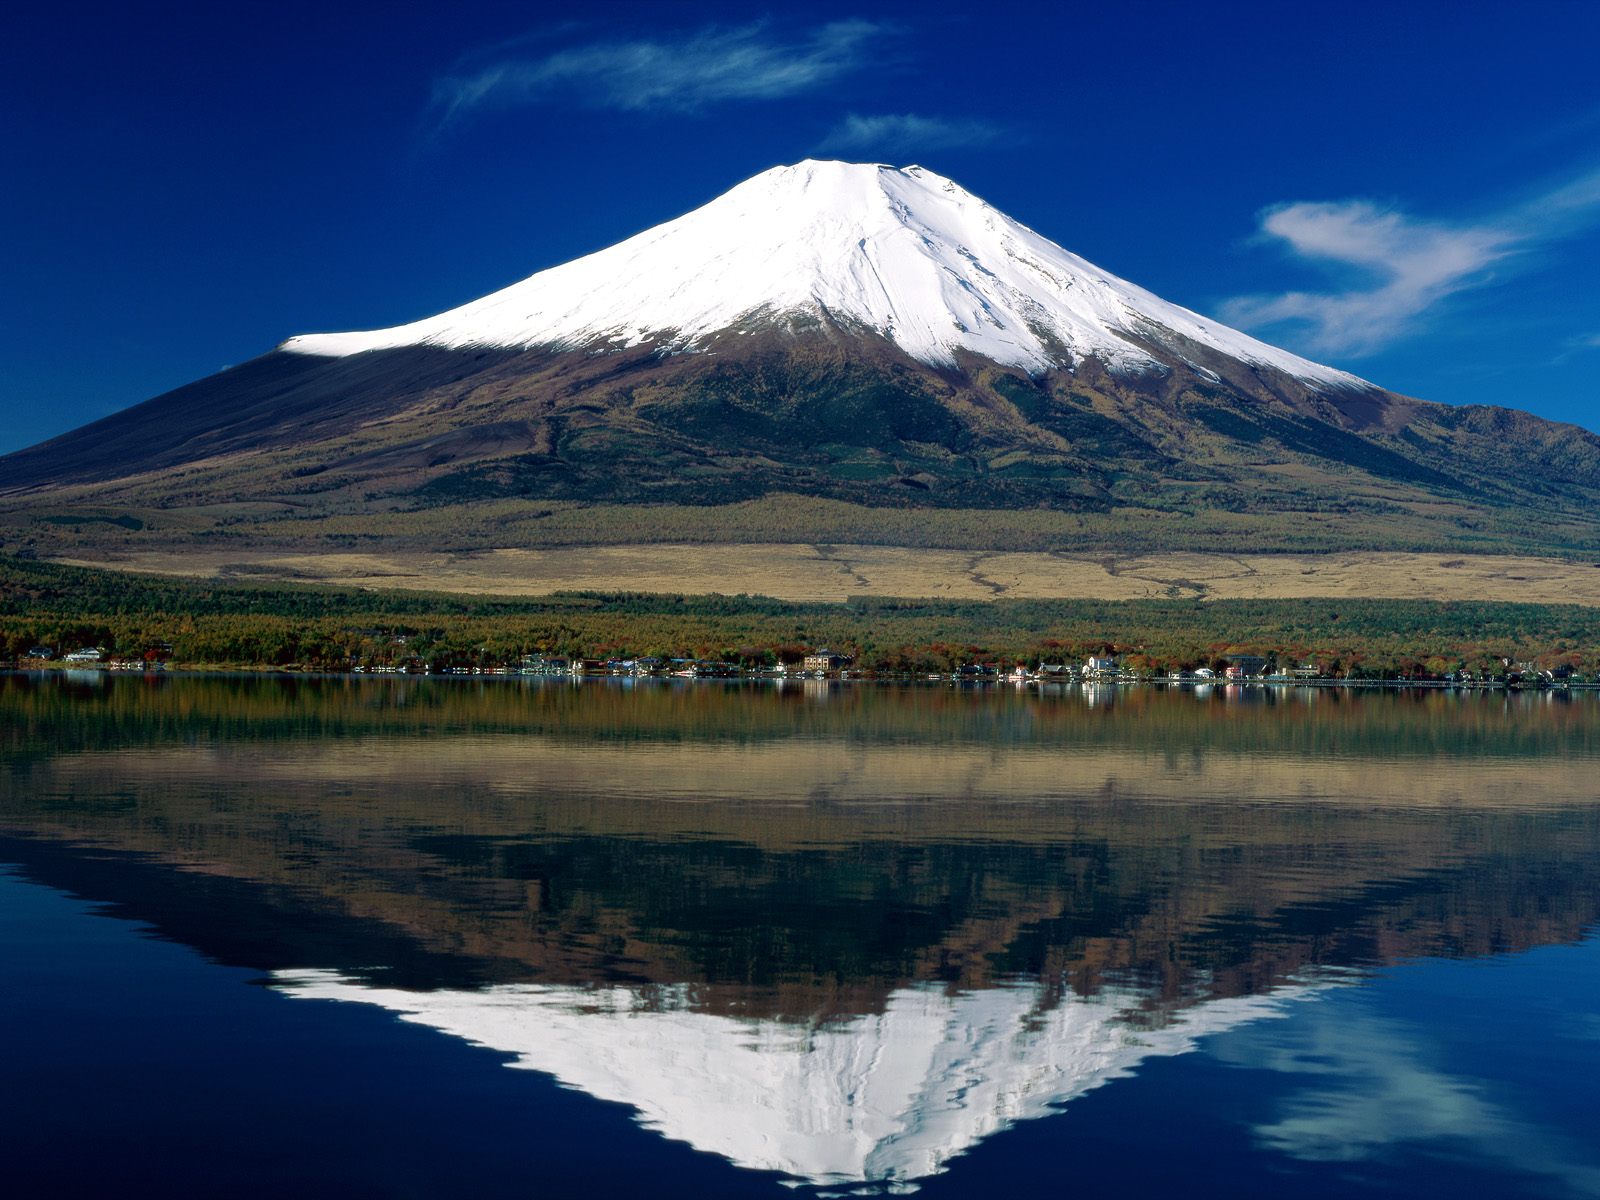 High Resolution Wallpaper | Mount Fuji 1600x1200 px